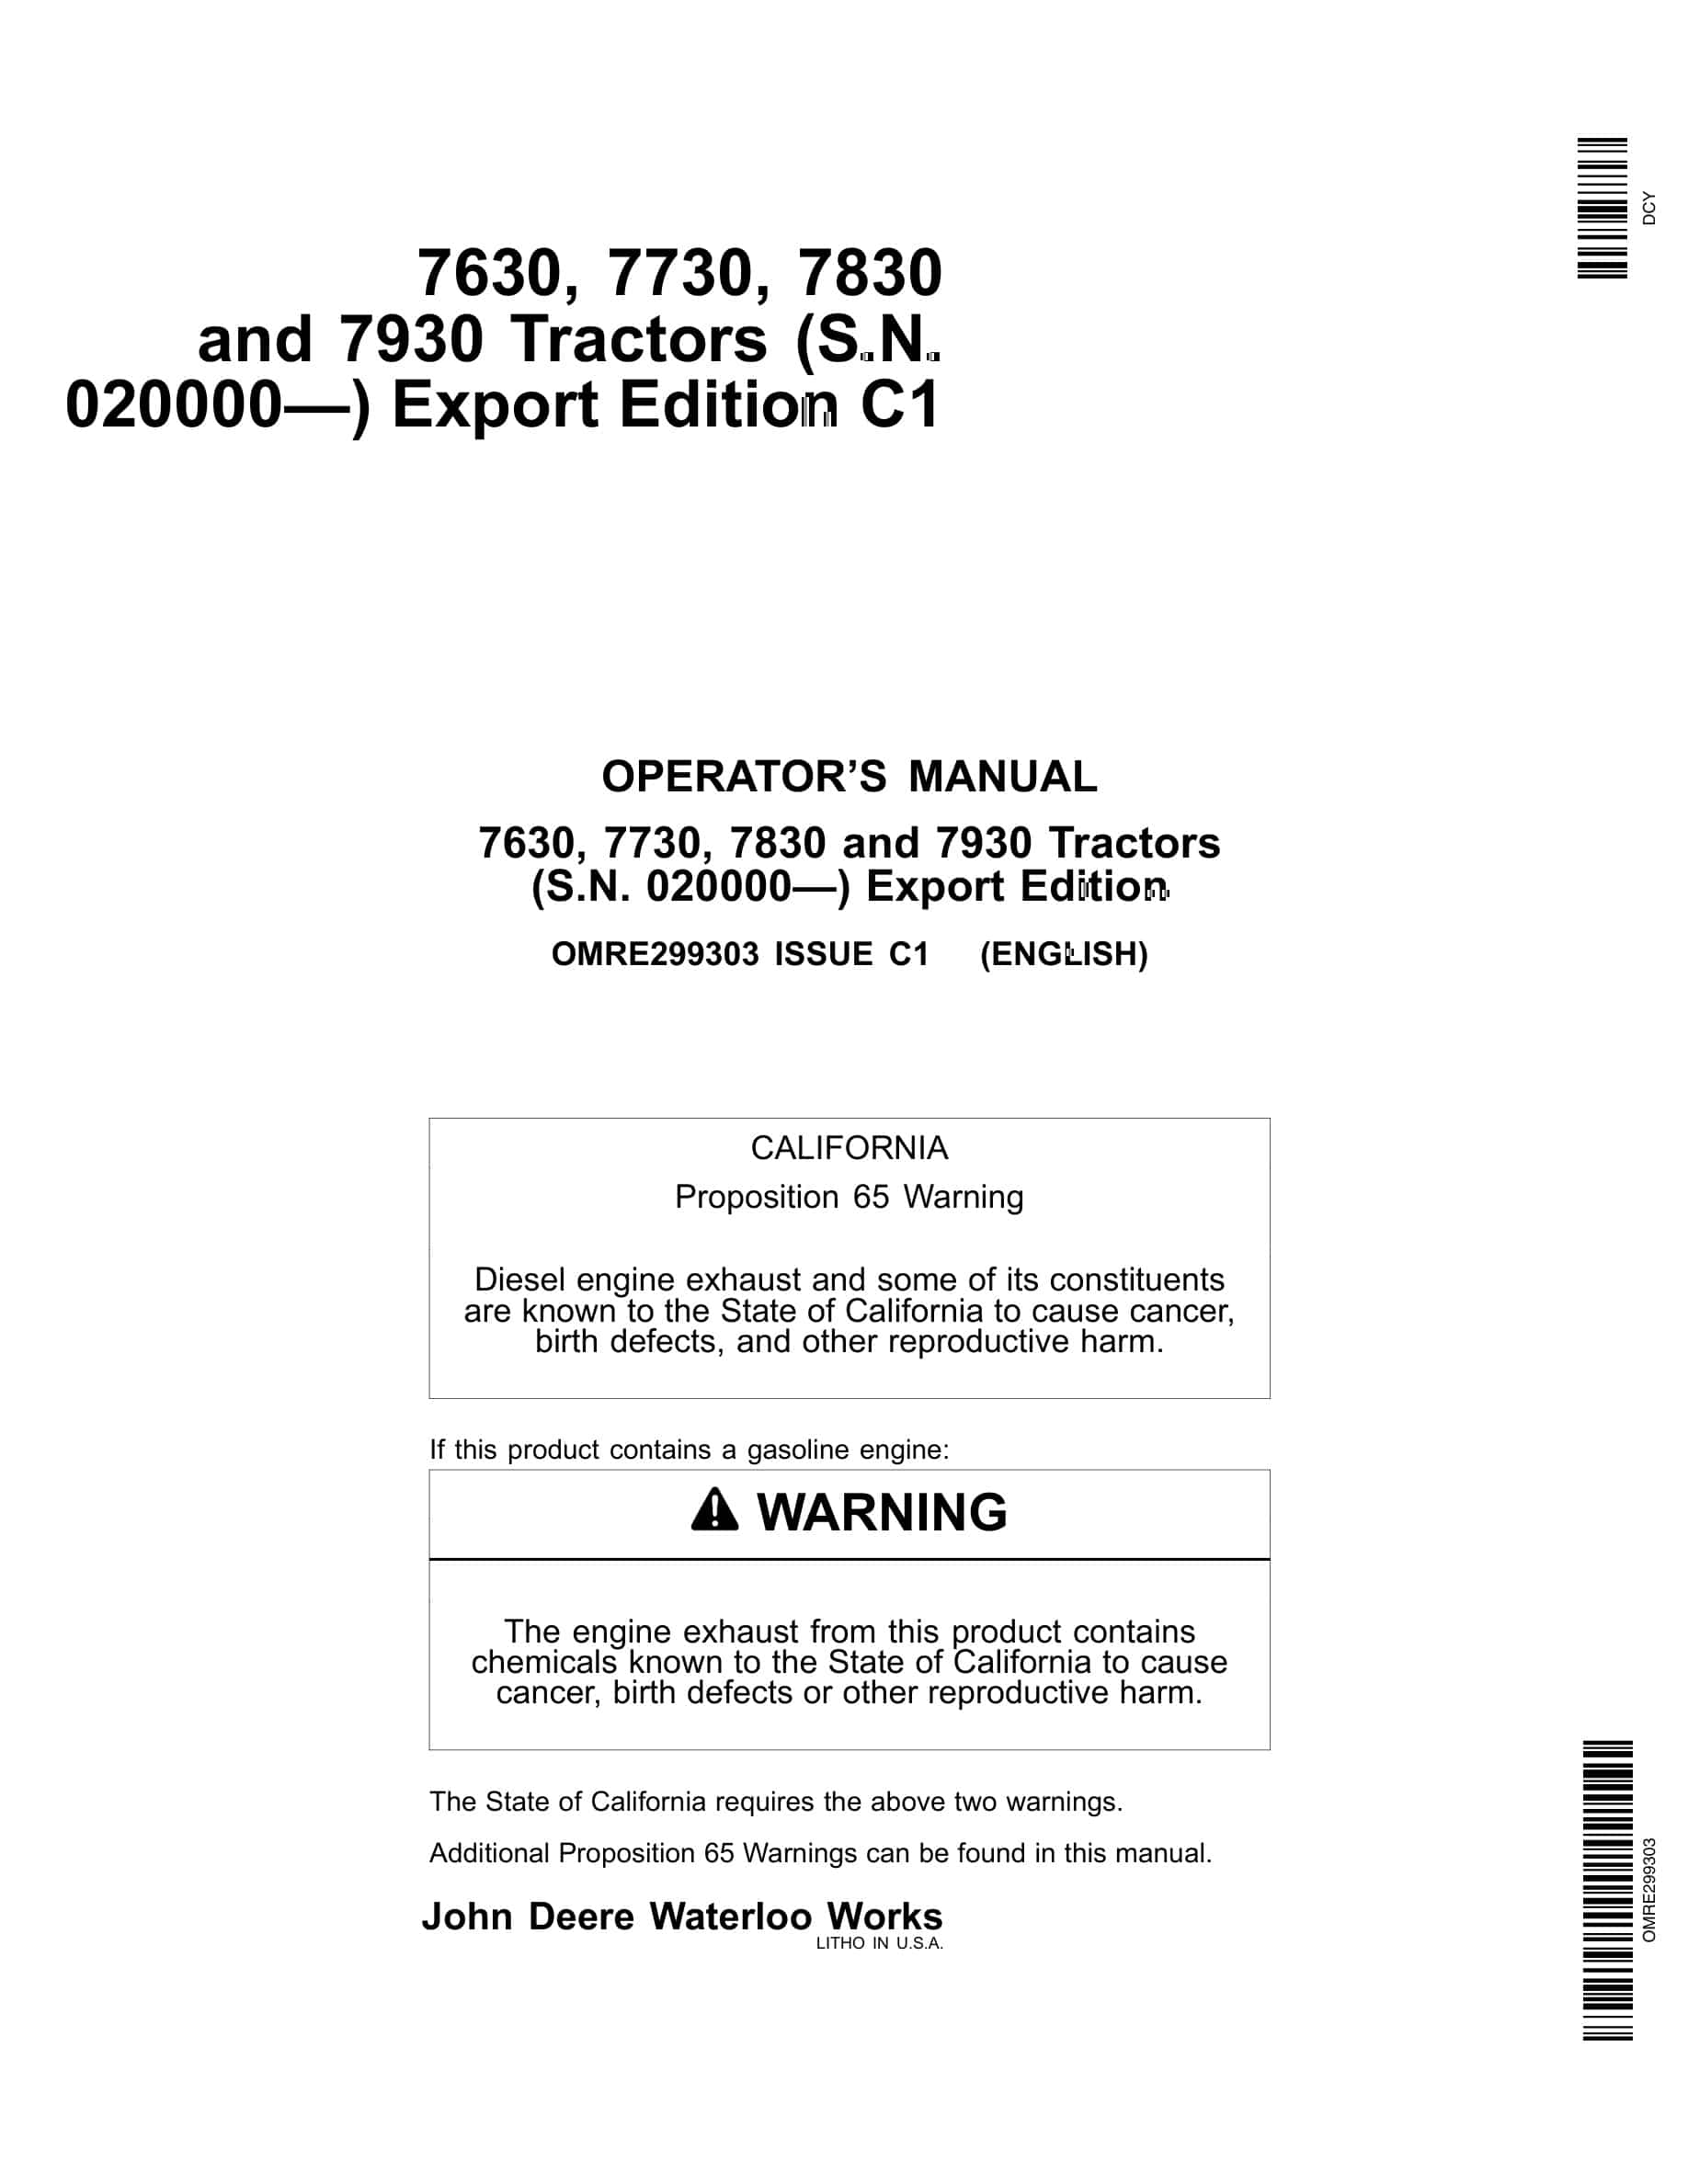 John Deere 7630, 7730, 7830 And 7930 Tractors Operator Manuals OMRE299303-1